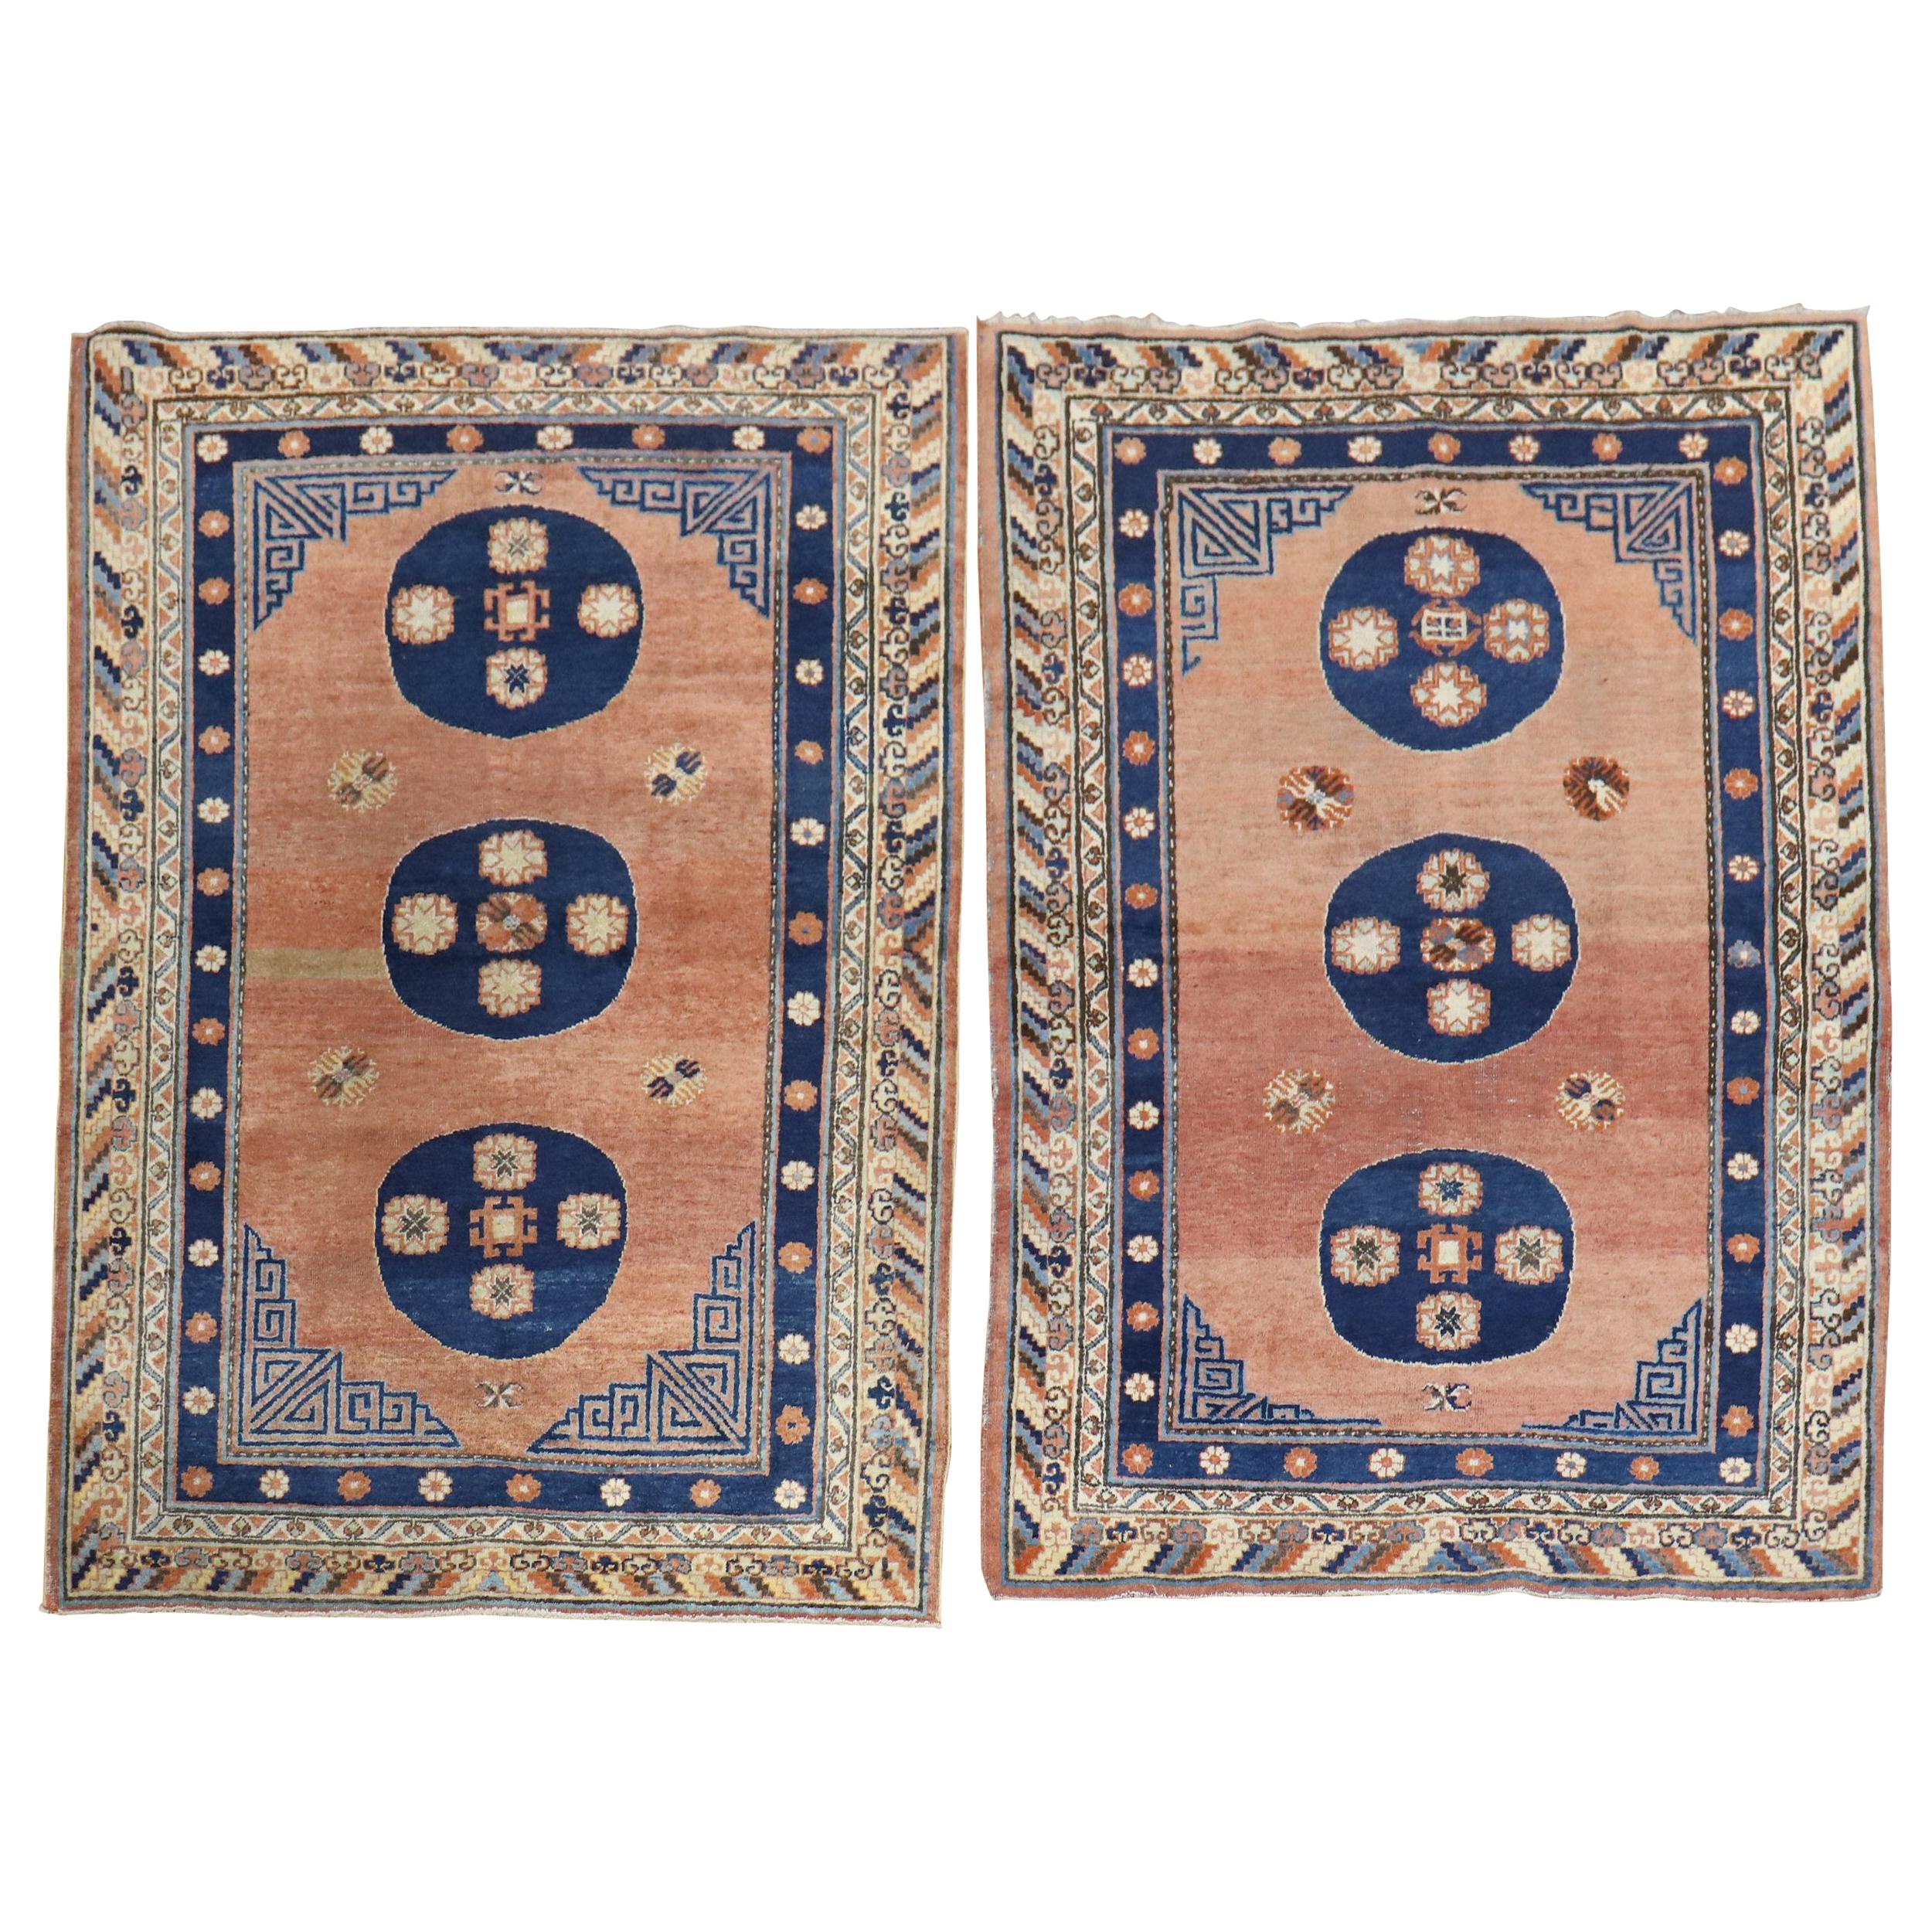 Rare Matching Pair of Antique Khotan Carpets